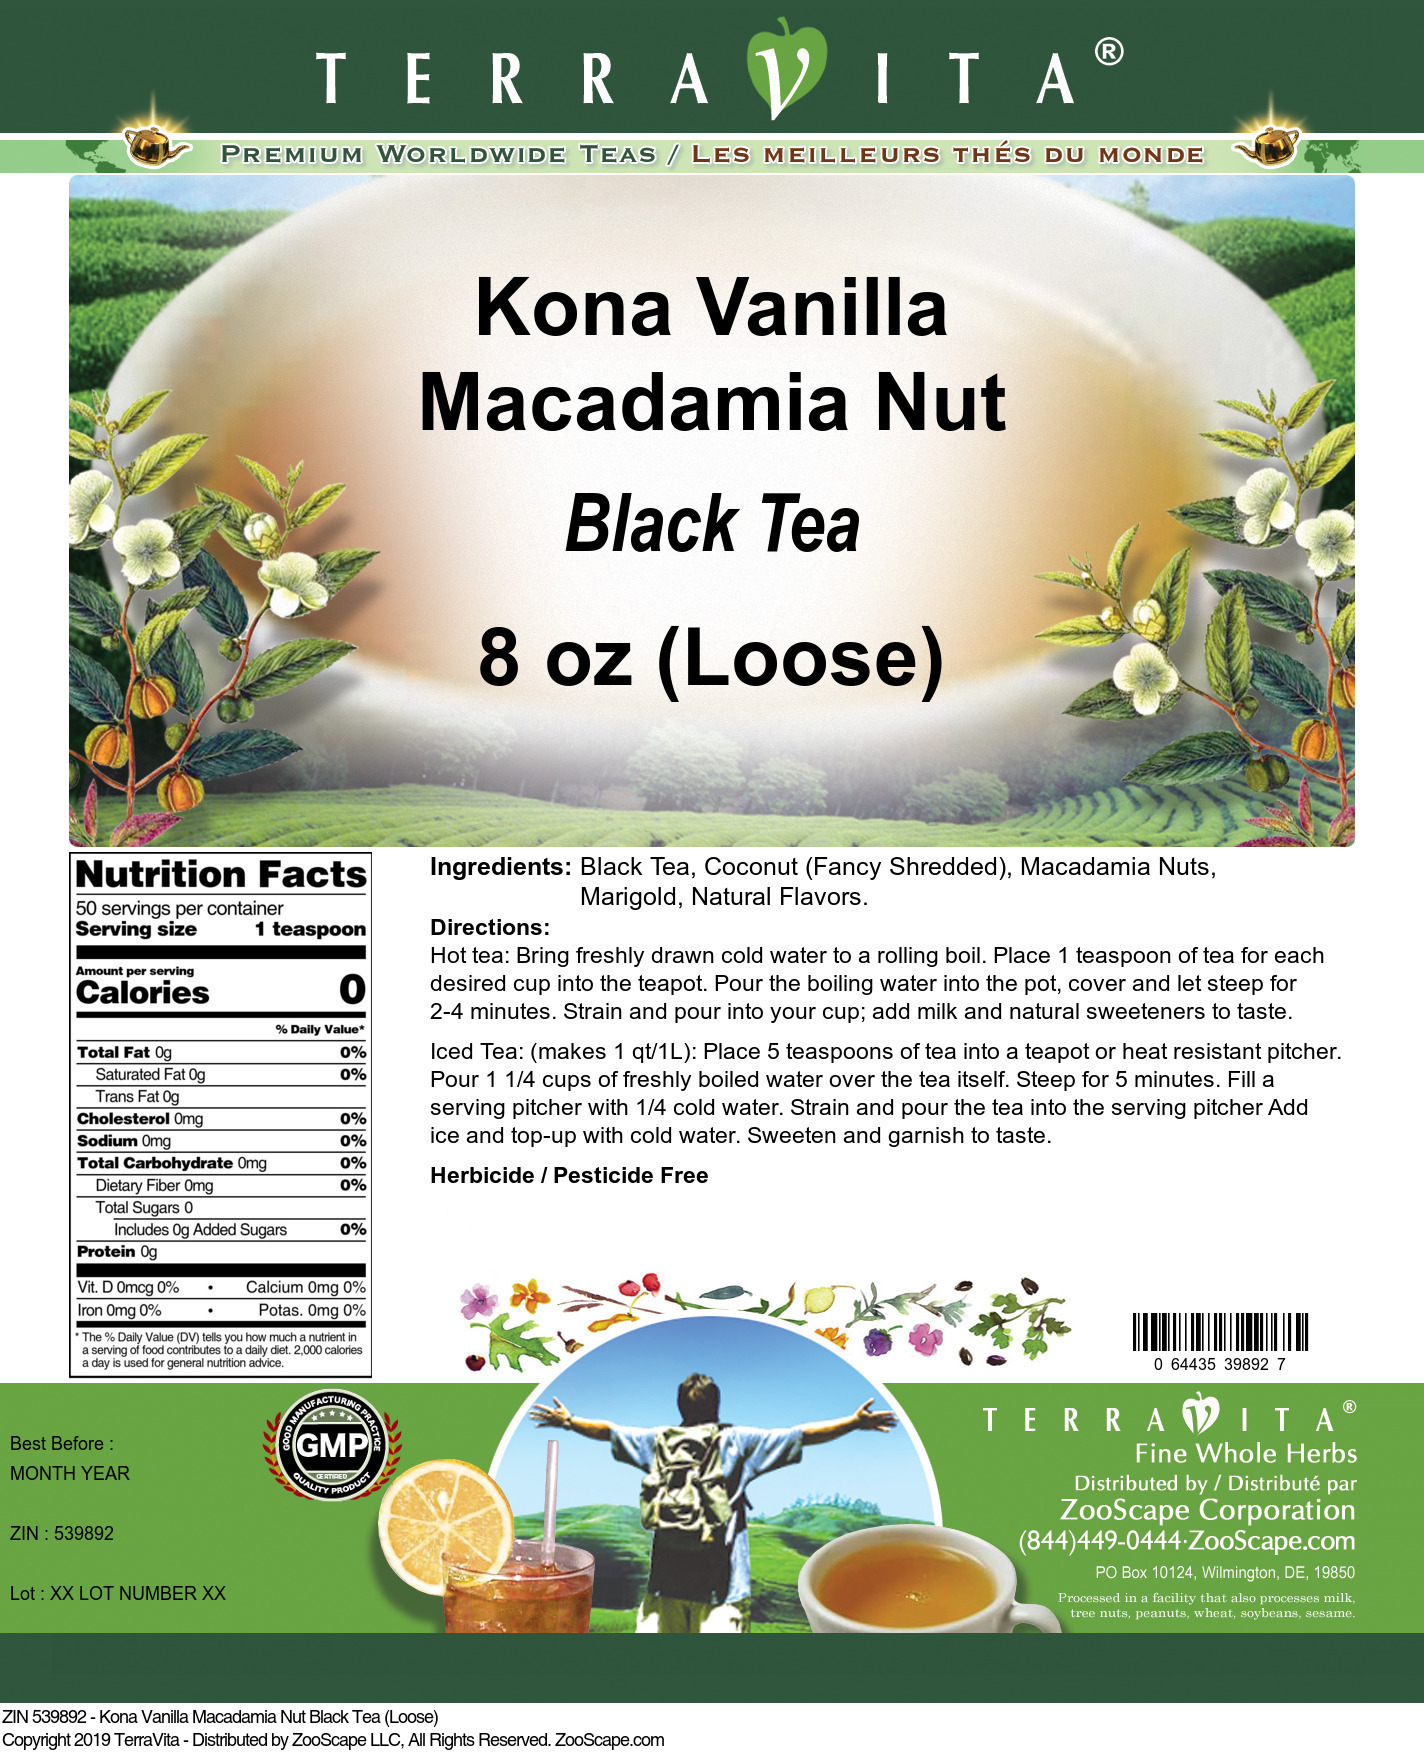 Kona Vanilla Macadamia Nut Black Tea (Loose) - Label